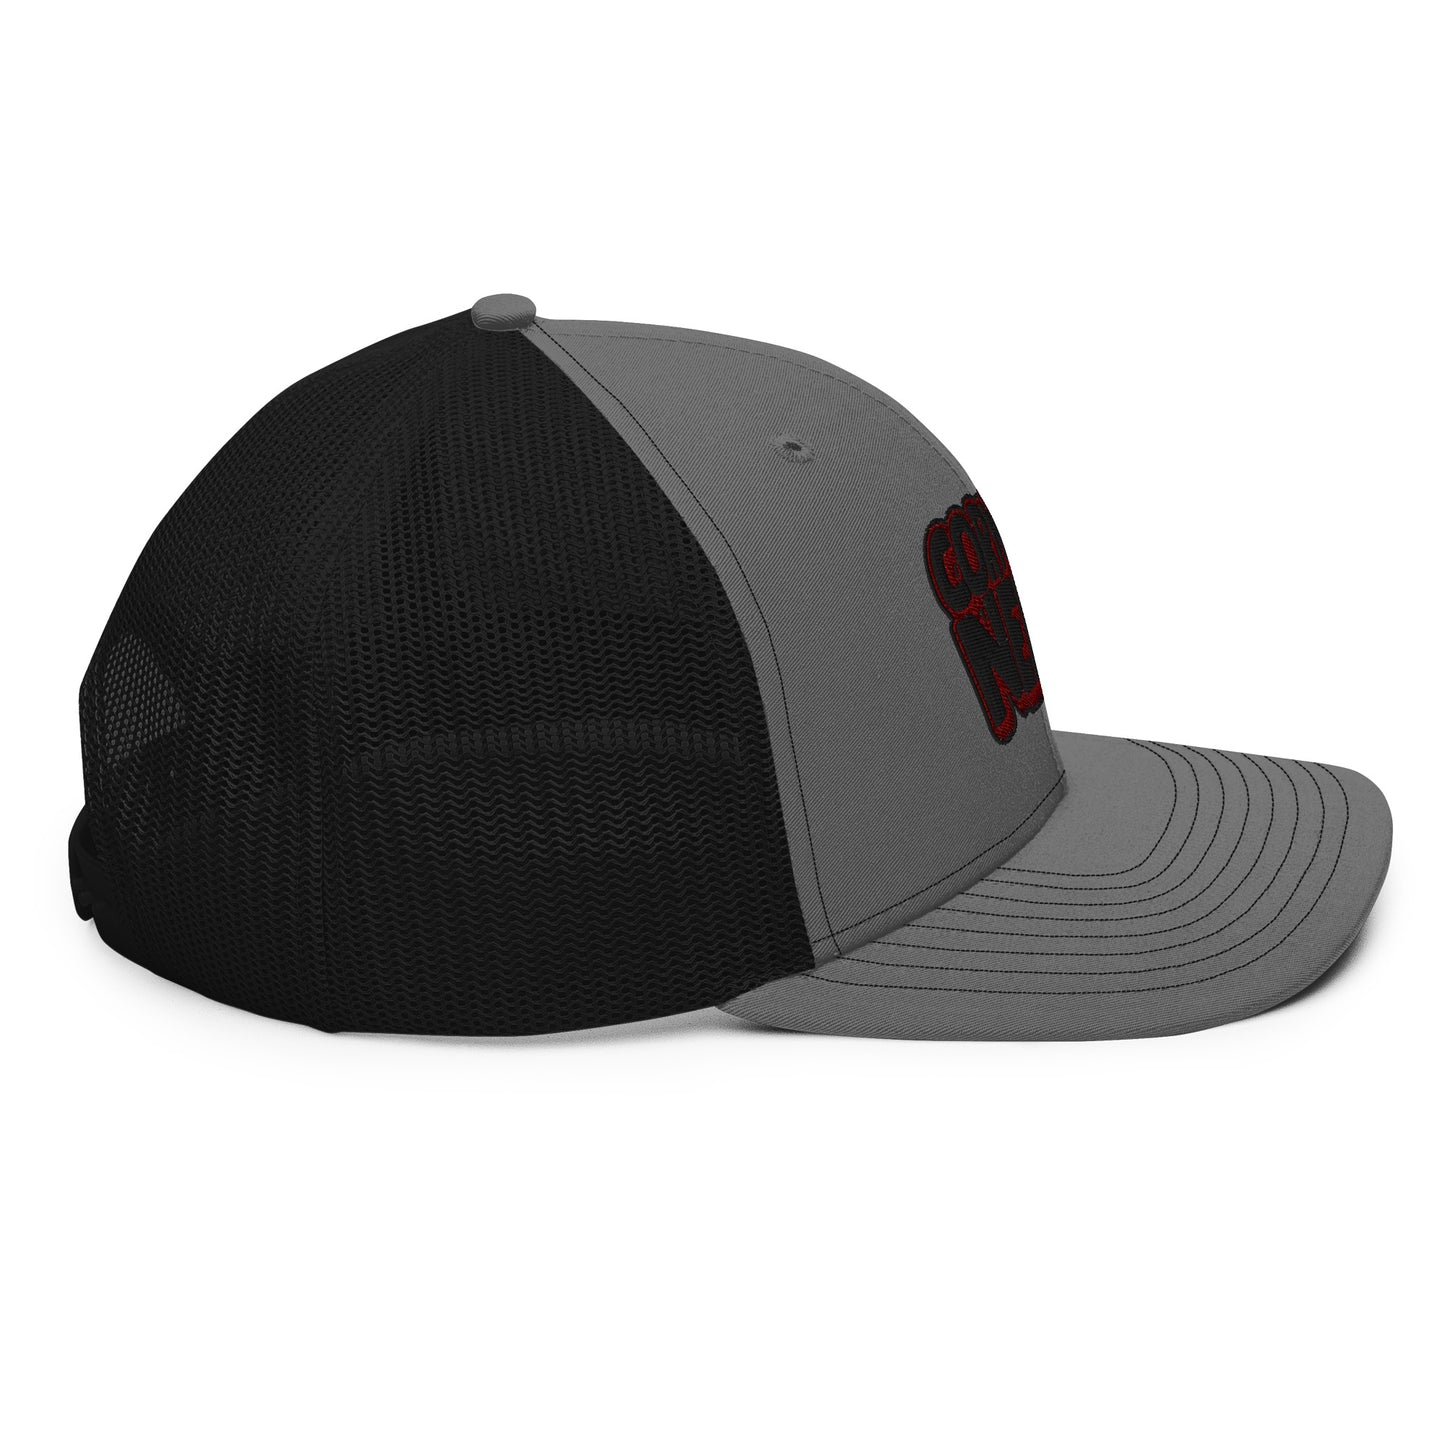 black/maroon nerds logo Richardson 112 snapback Trucker hat